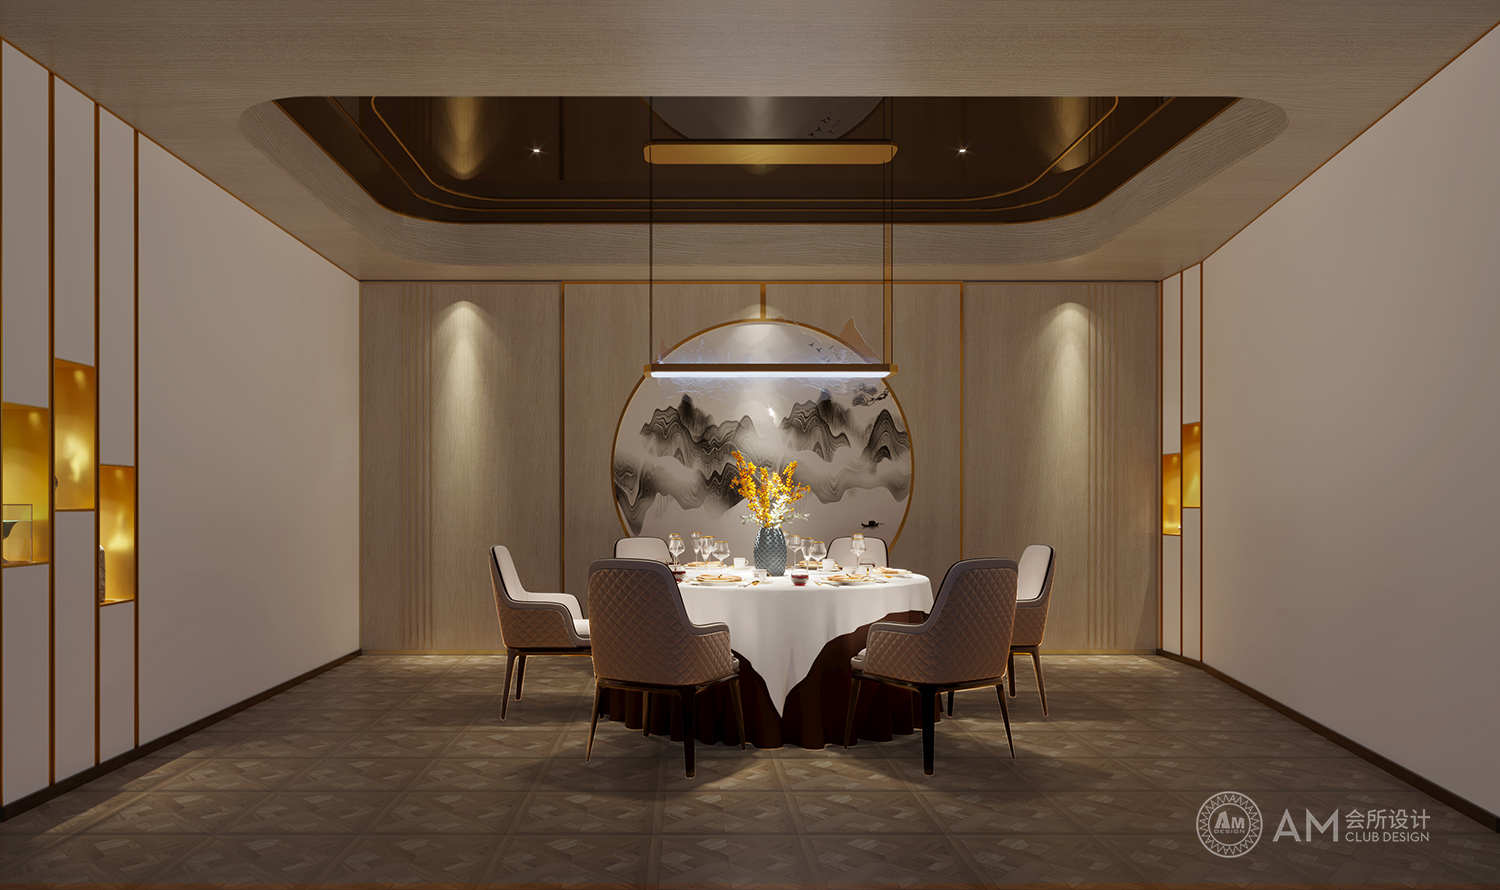 AM DESIGN | Private room design of lishiyuan Spa Club Restaurant